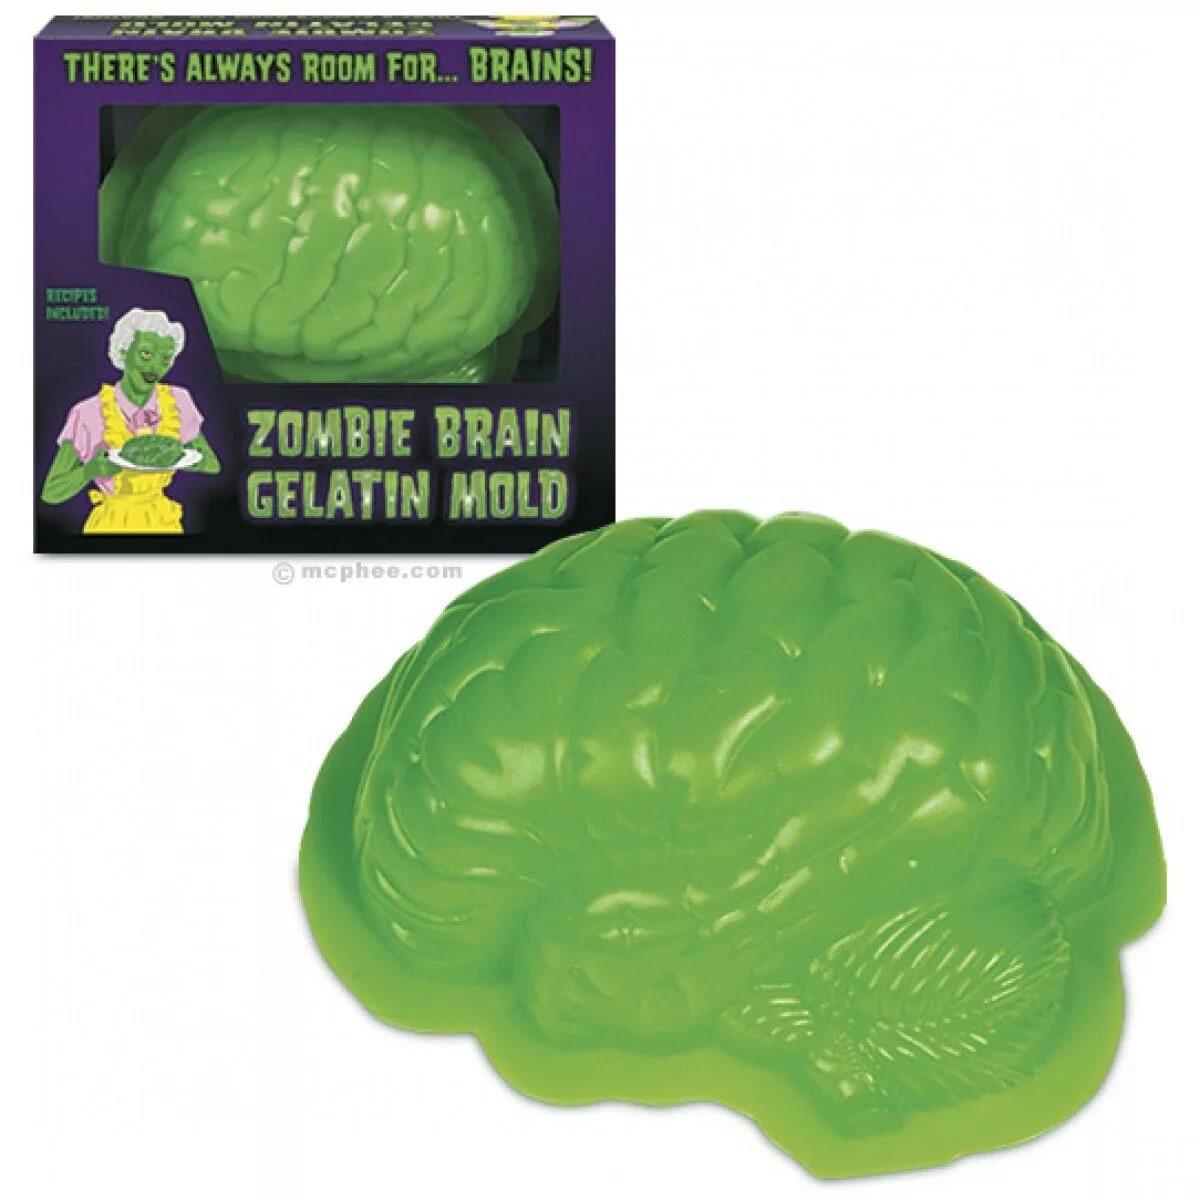 Zombie brain. Zombie Brain жвачка. Zombie Brain конфеты. Молд зомби. Жевательная резинка зомби Брейн.